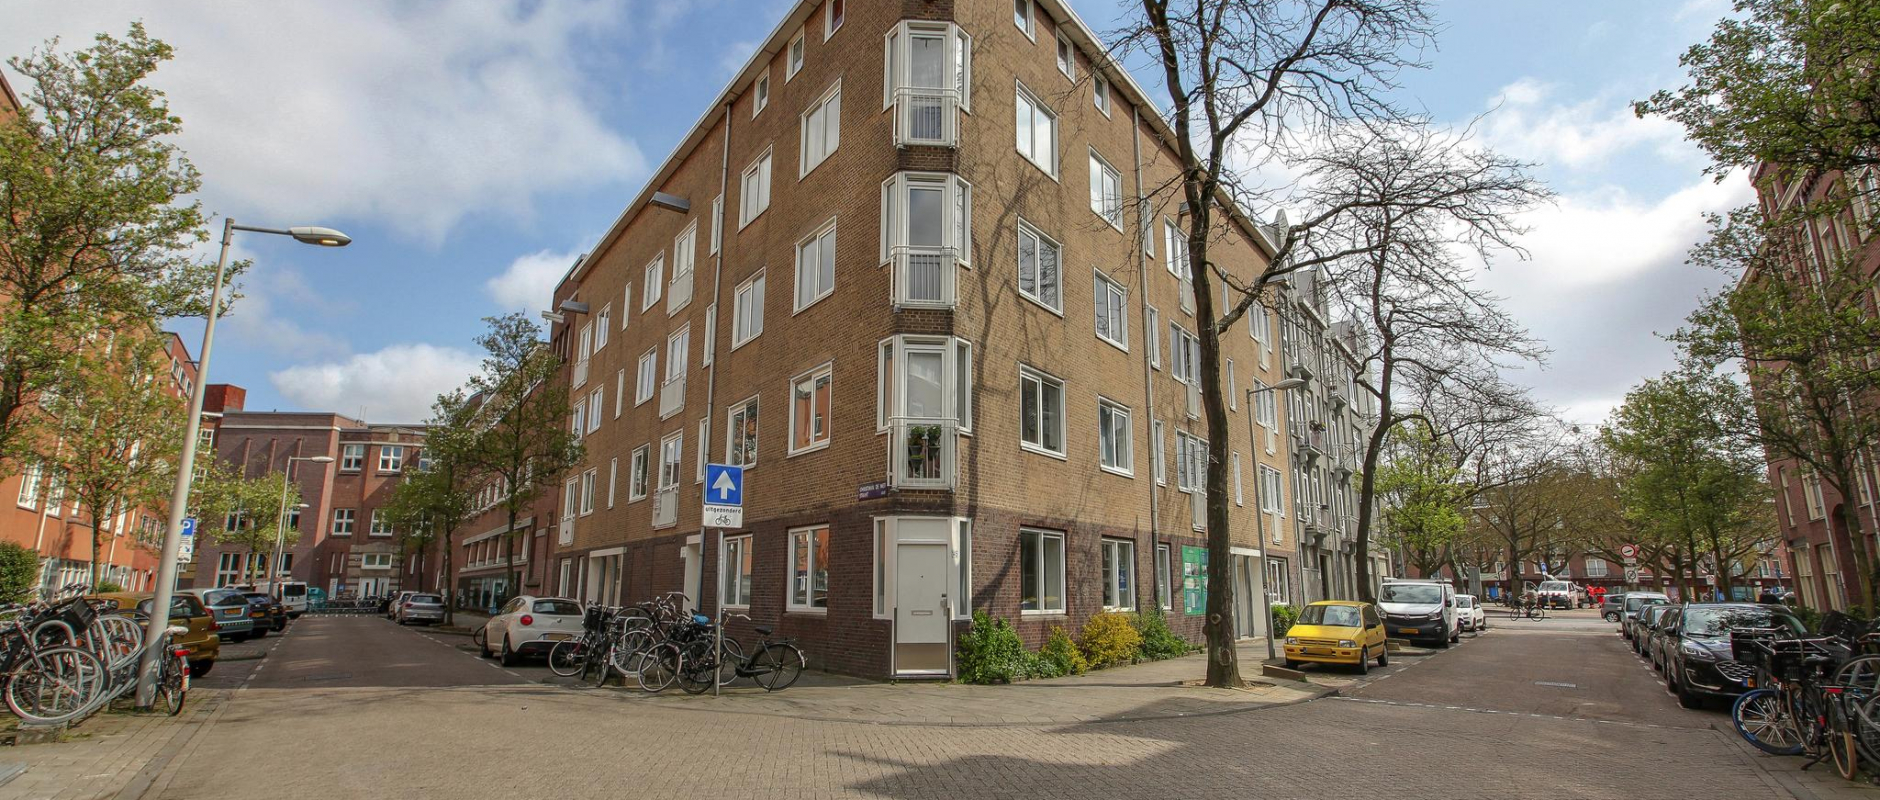 Woning te koop aan de Reitzstraat 145 te Amsterdam